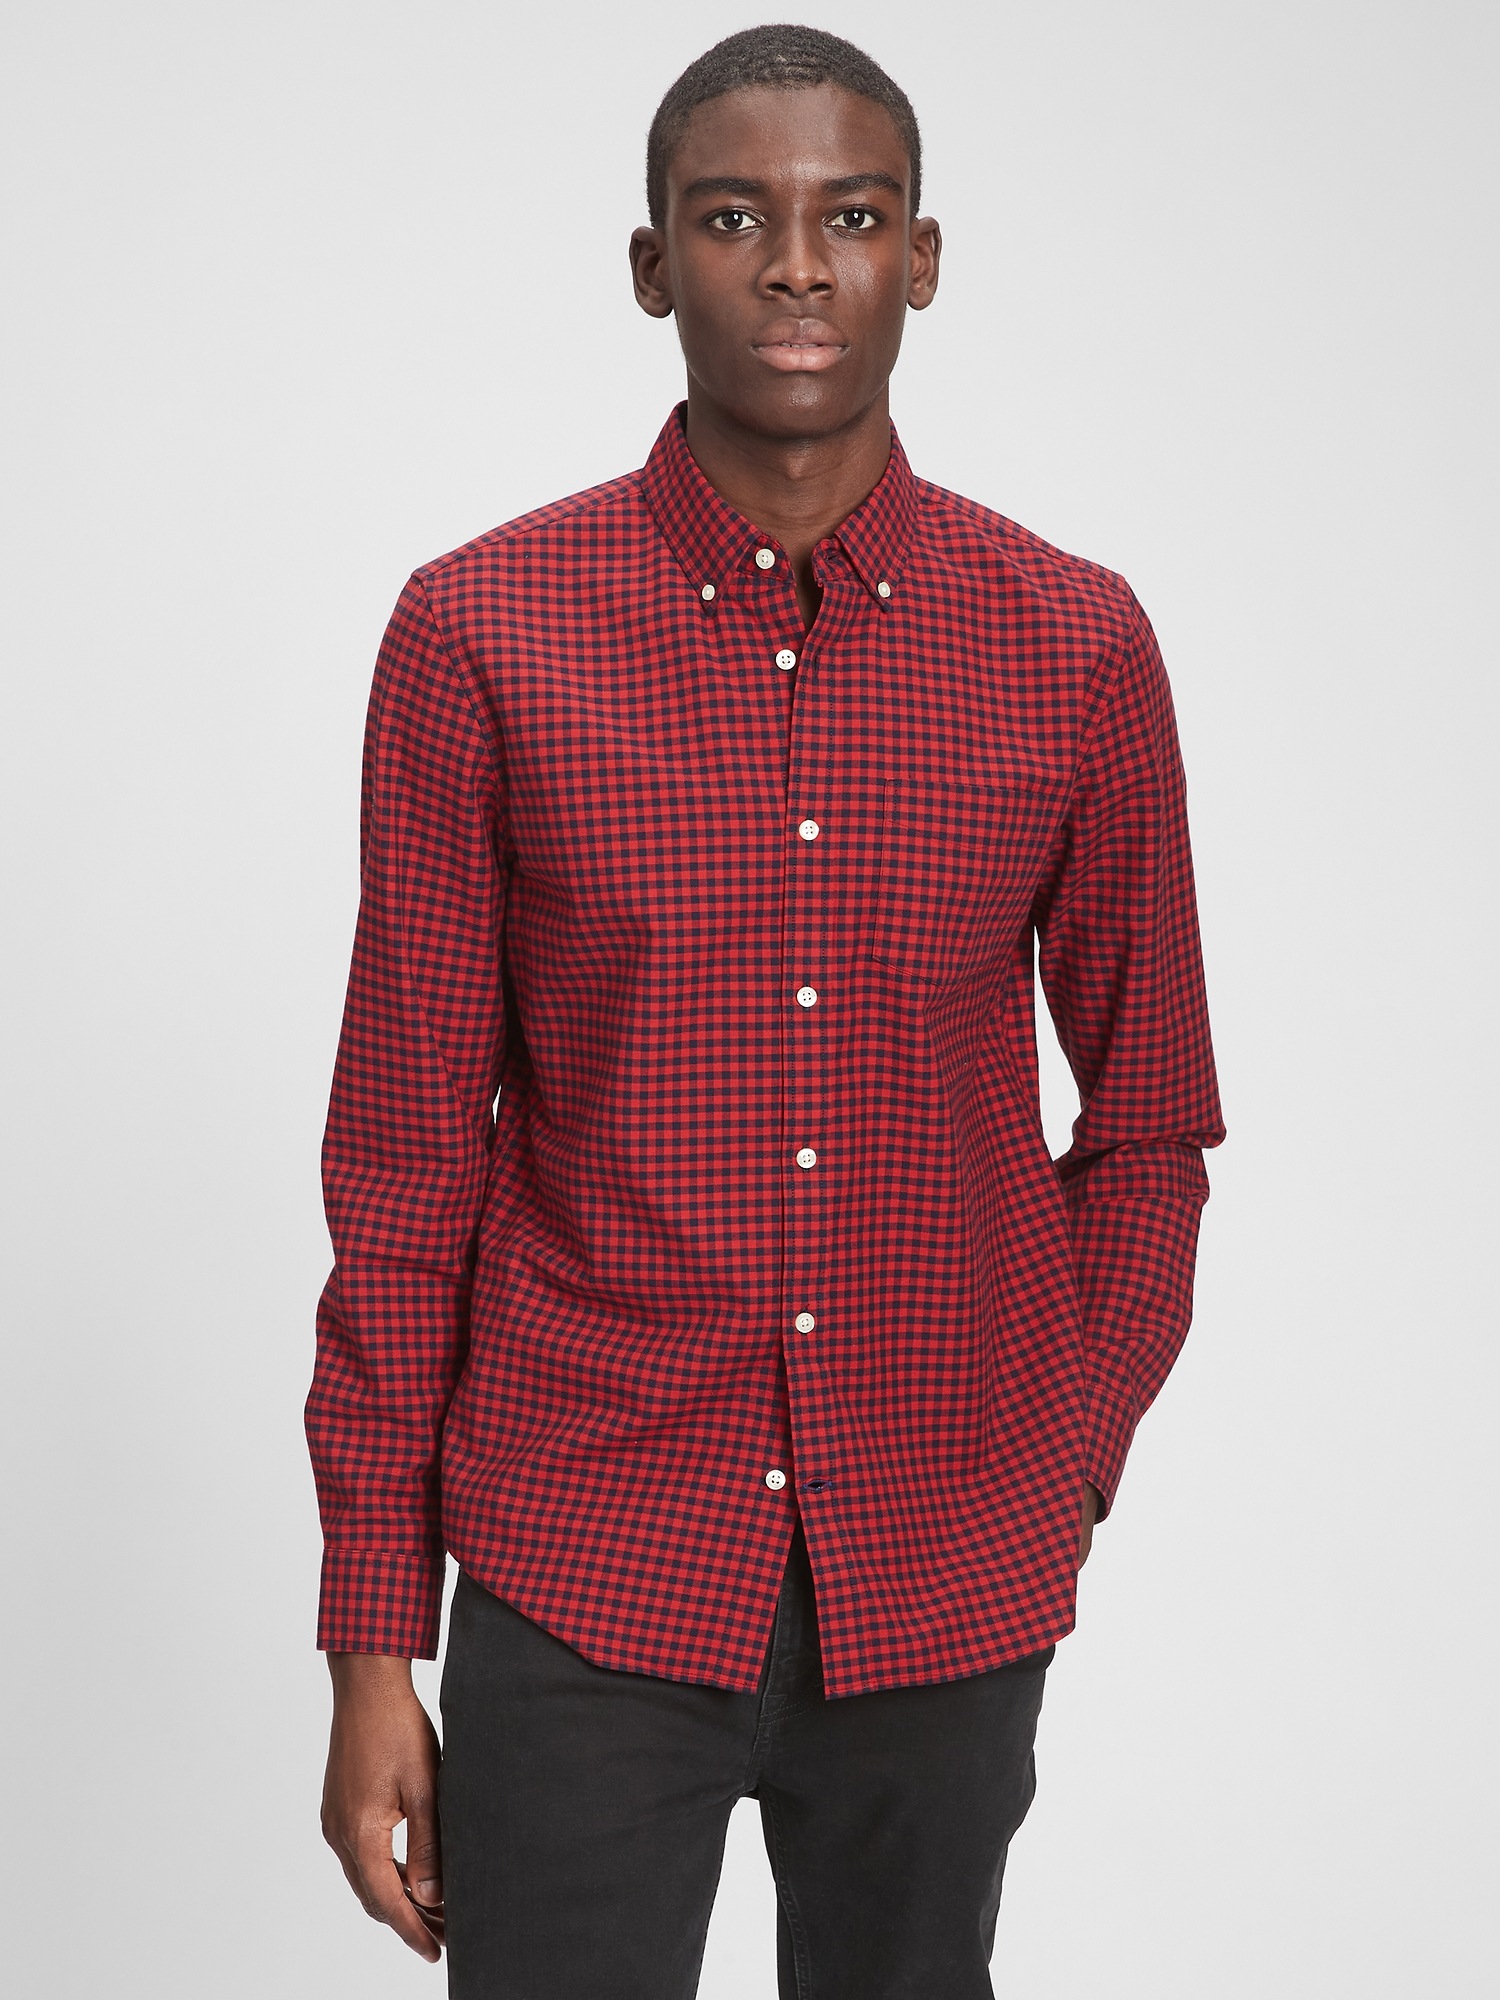 Gap Factory Men's Slim Fit Plaid Oxford Shirt (Size Large only)